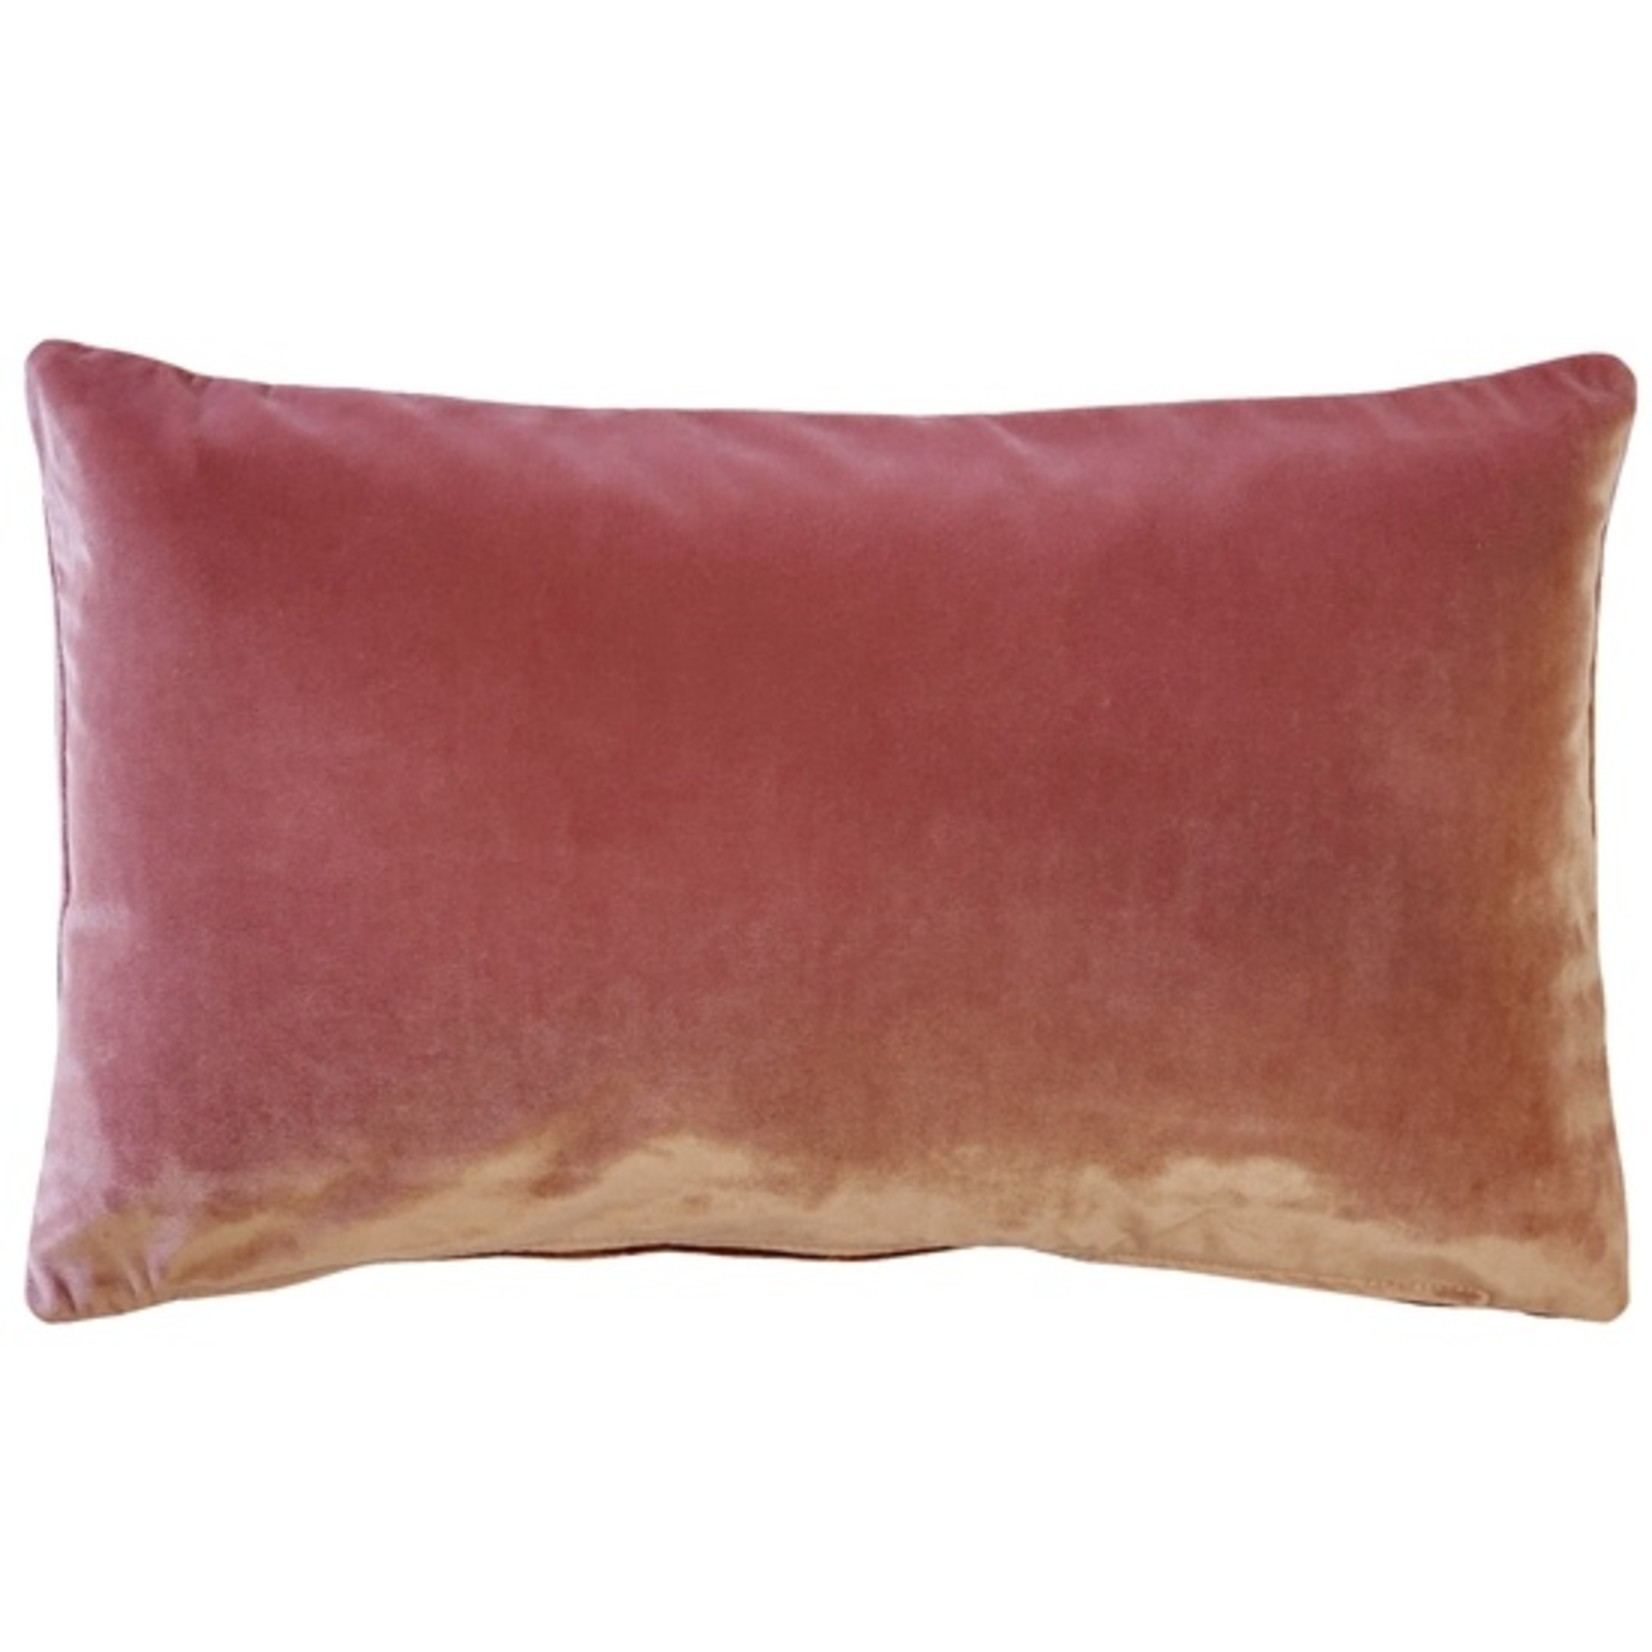 FAIRE/PILLOW DECOR Castello Velvet Pillow